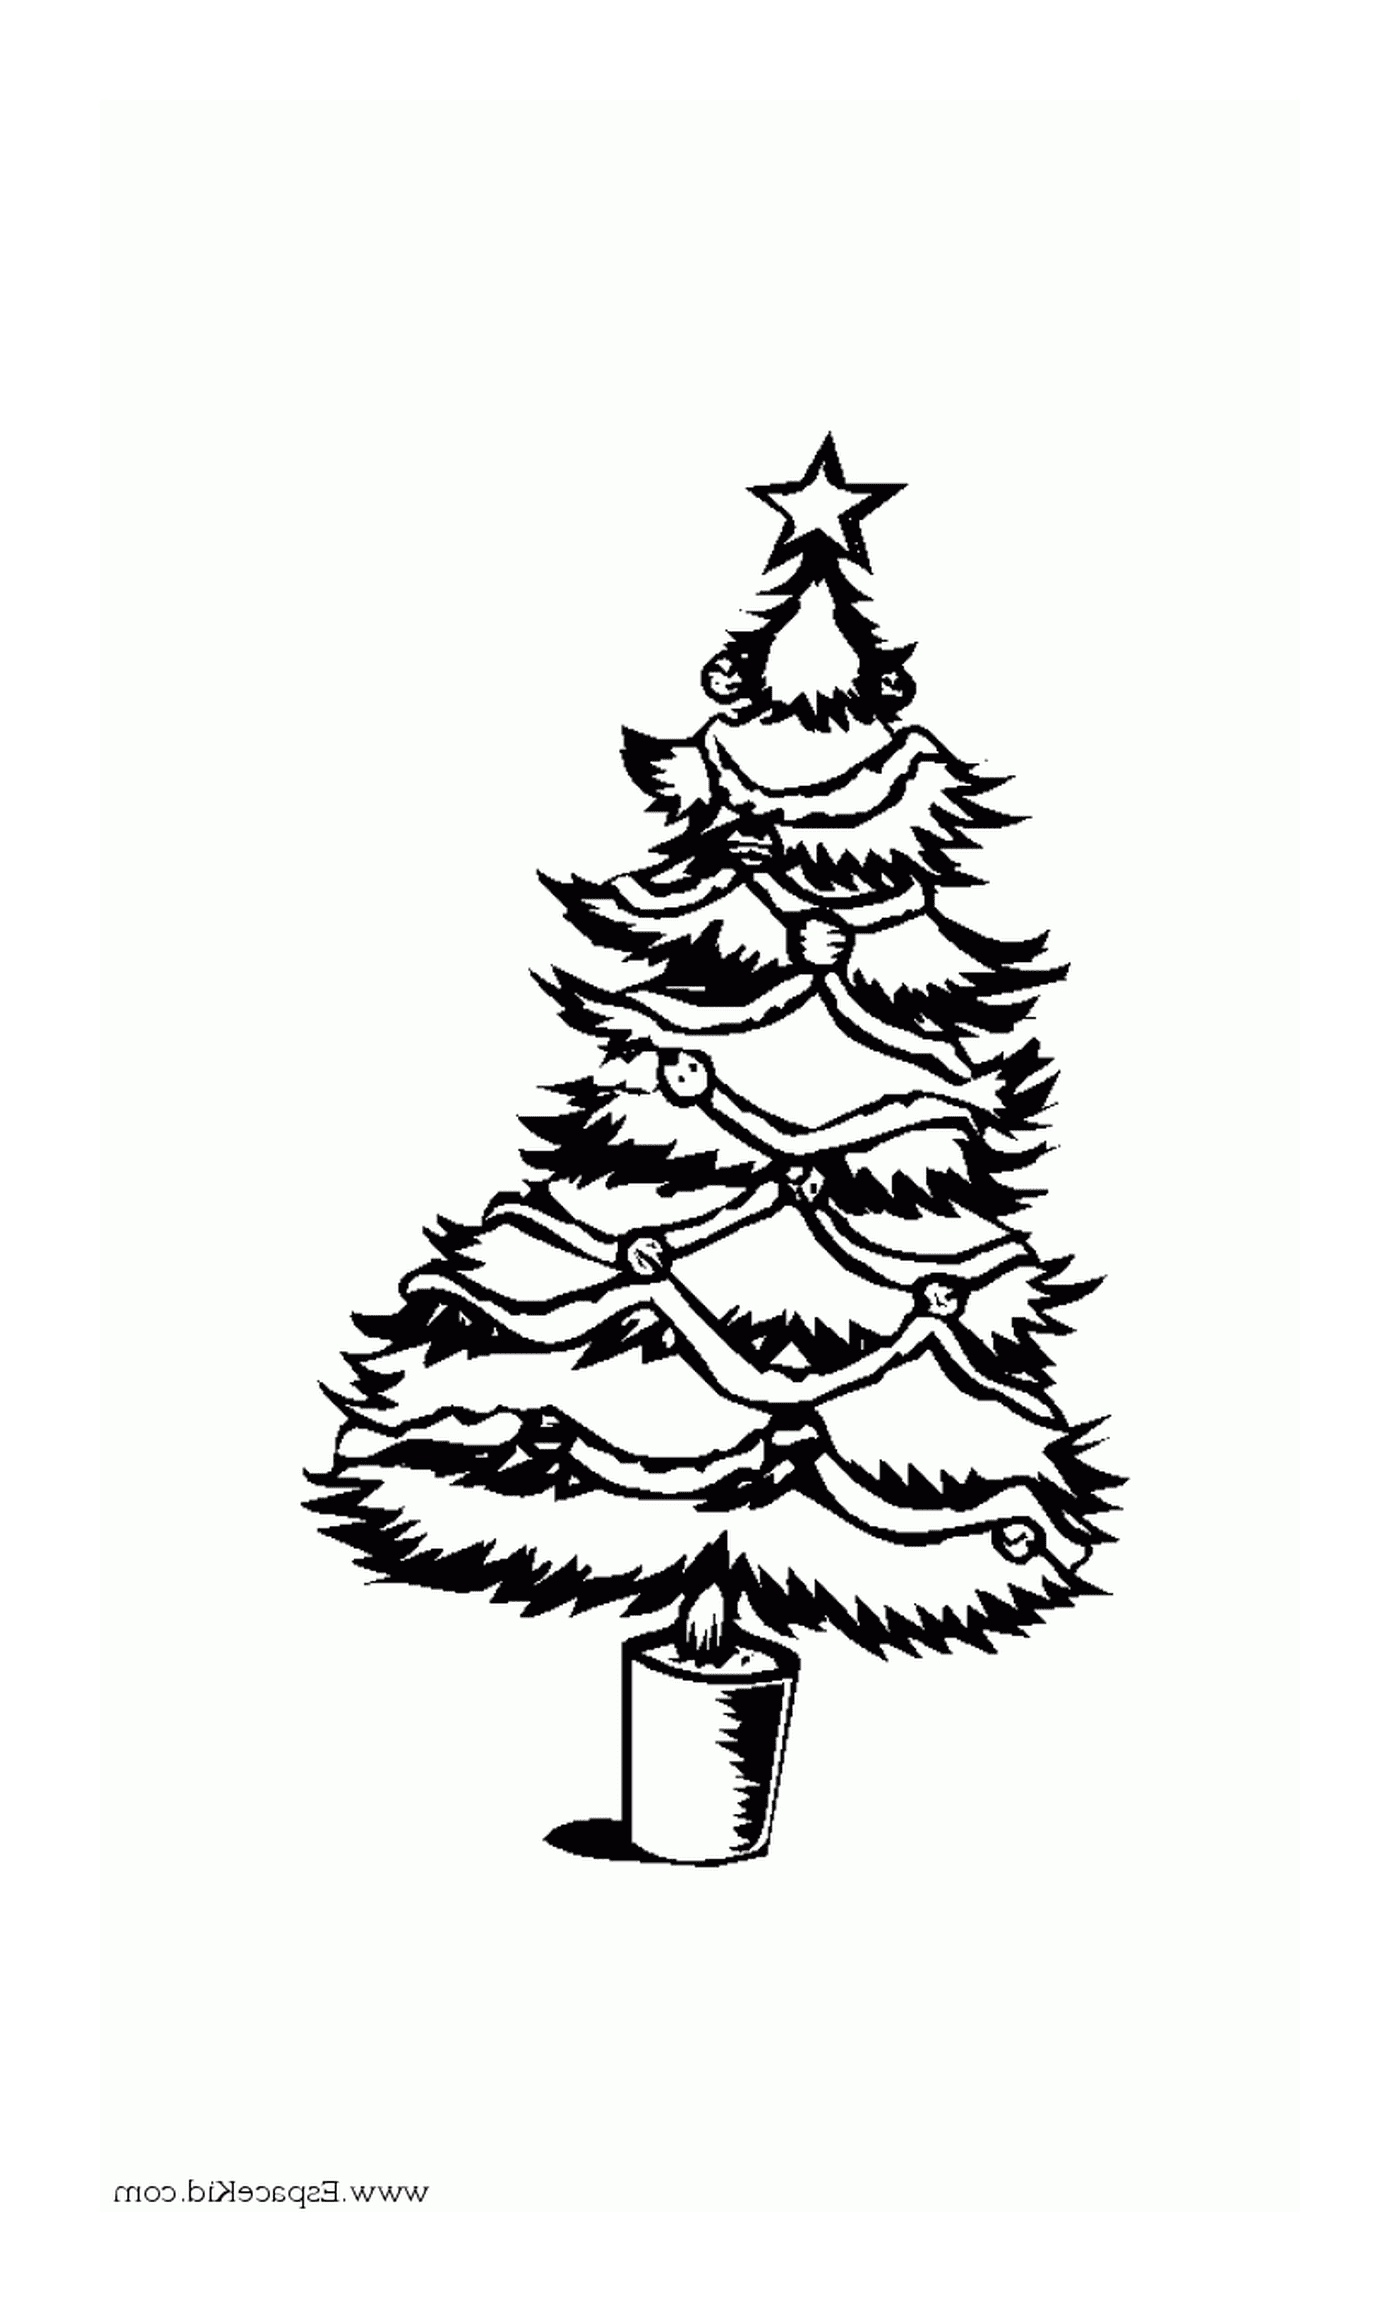  A traditional Christmas tree 